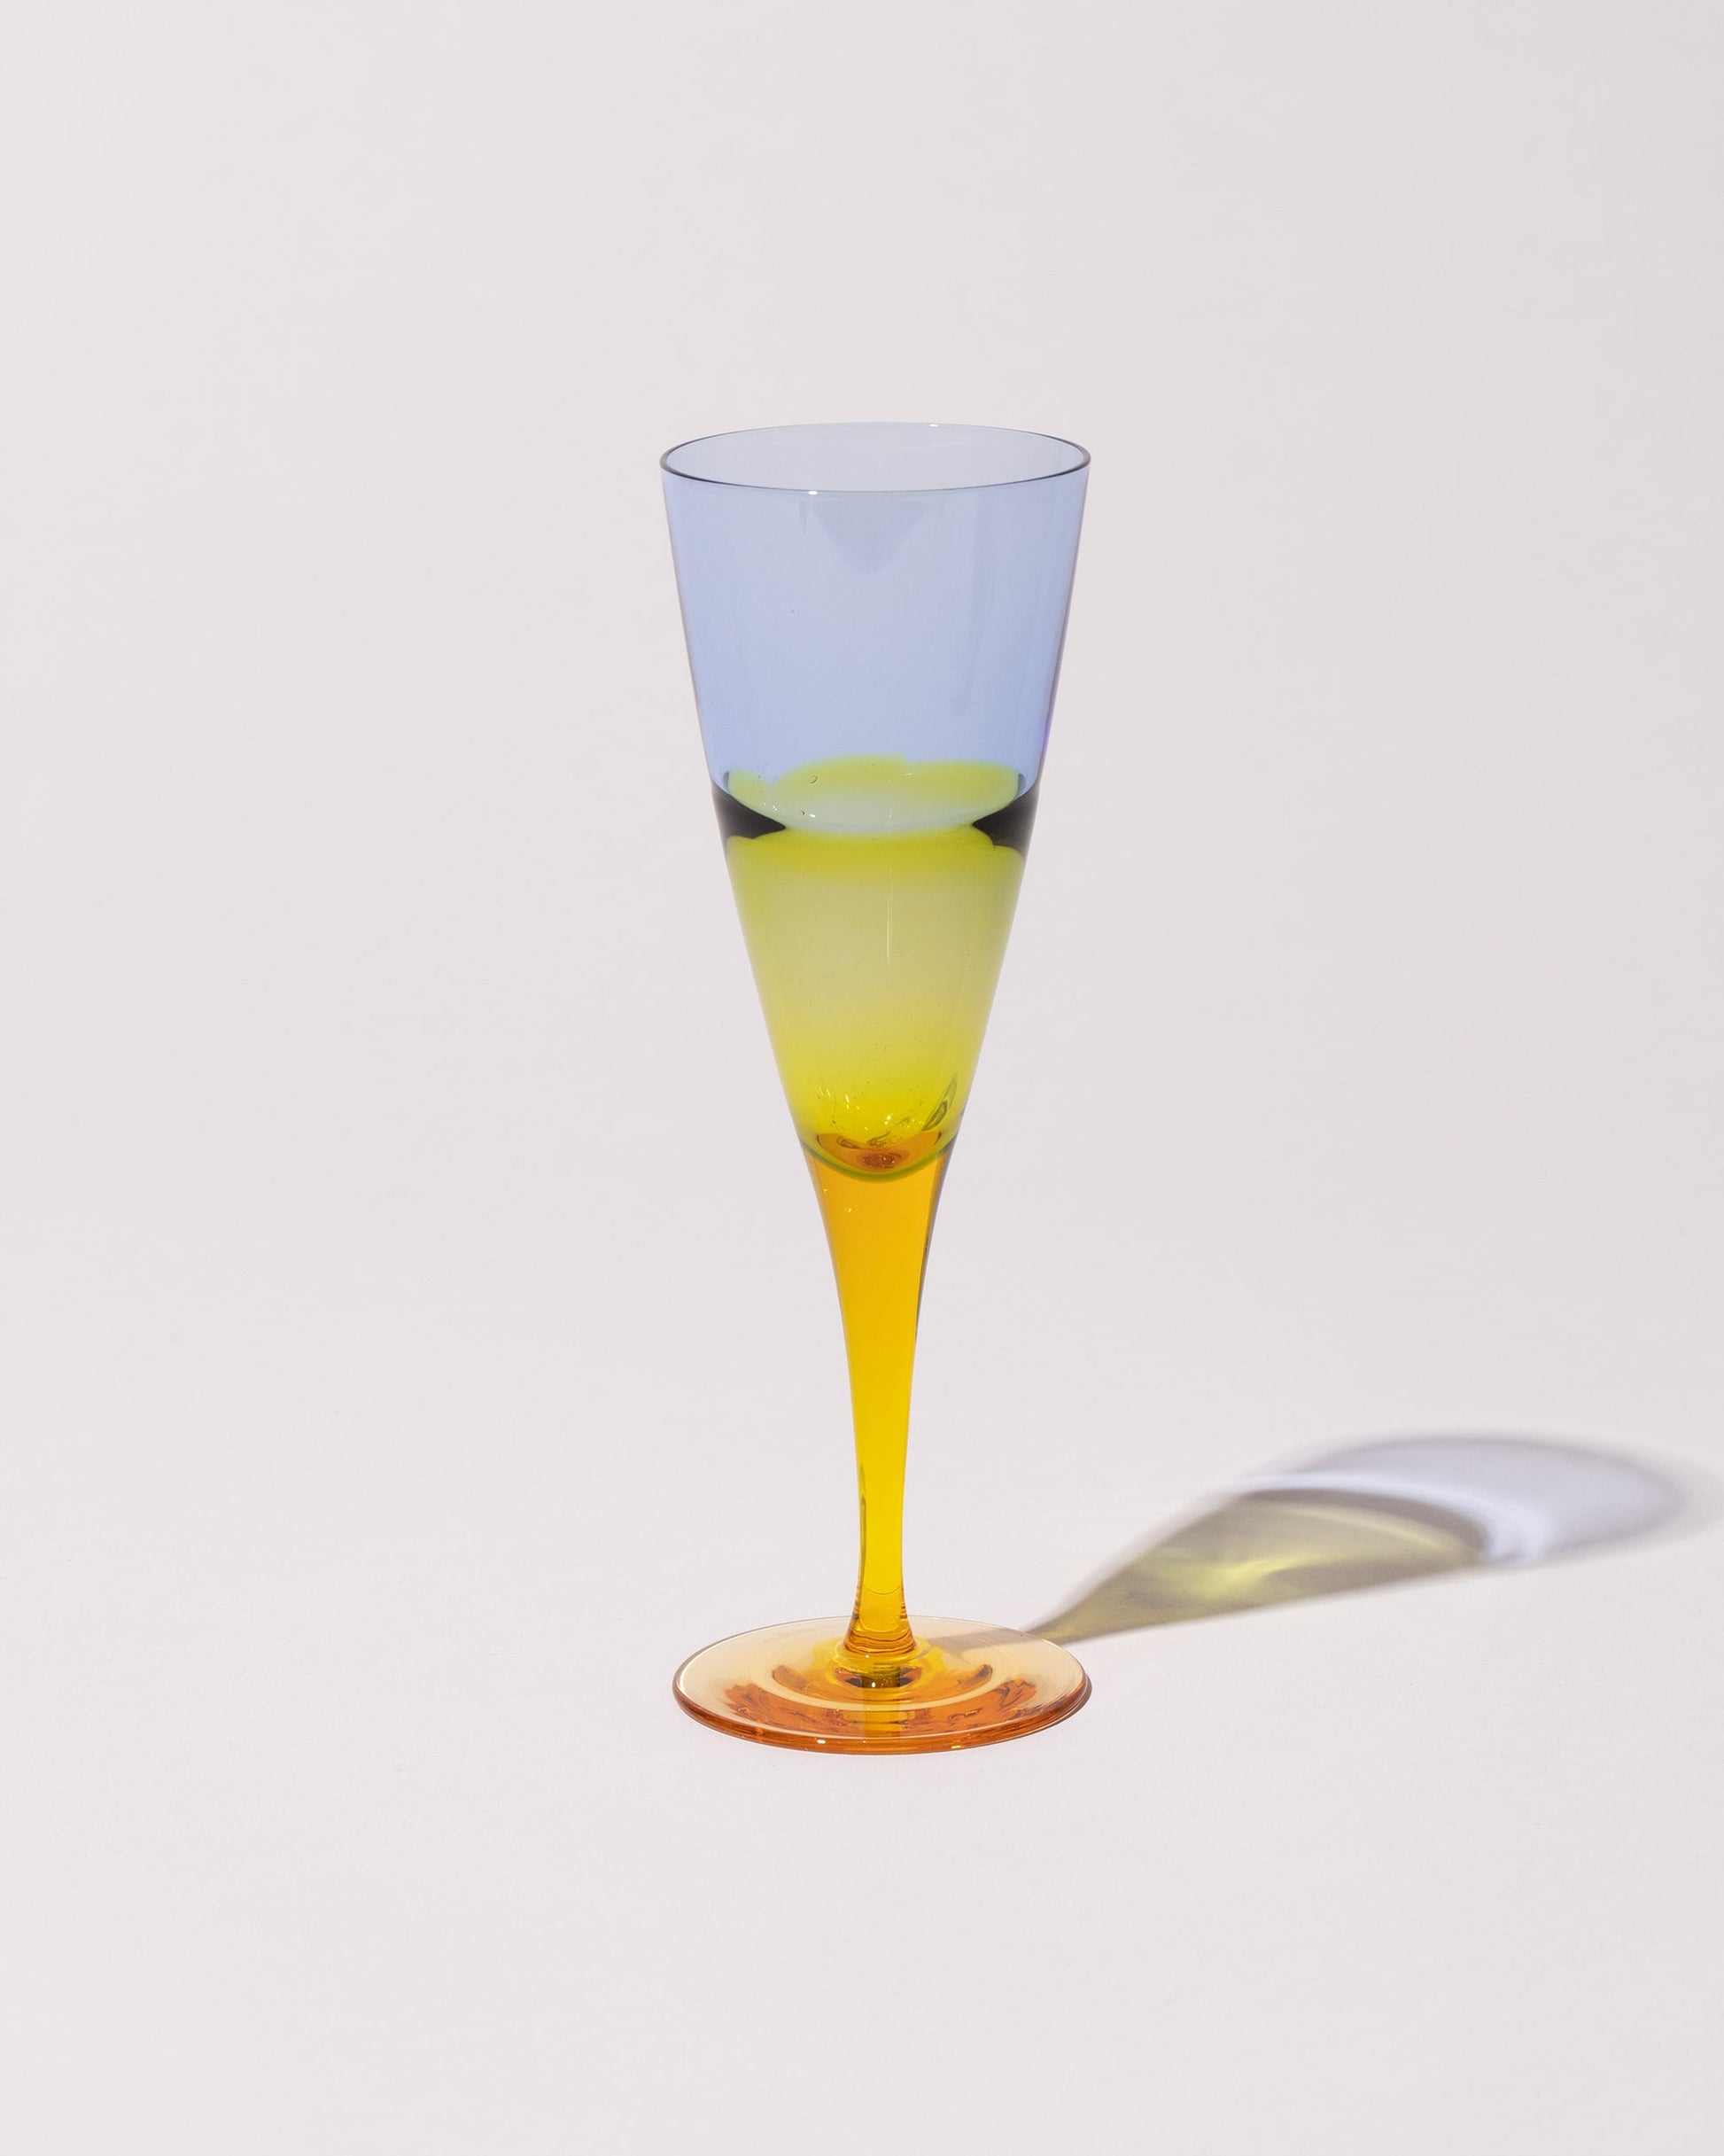  Sugahara Glassworks Duo Wine Glass on light color background.